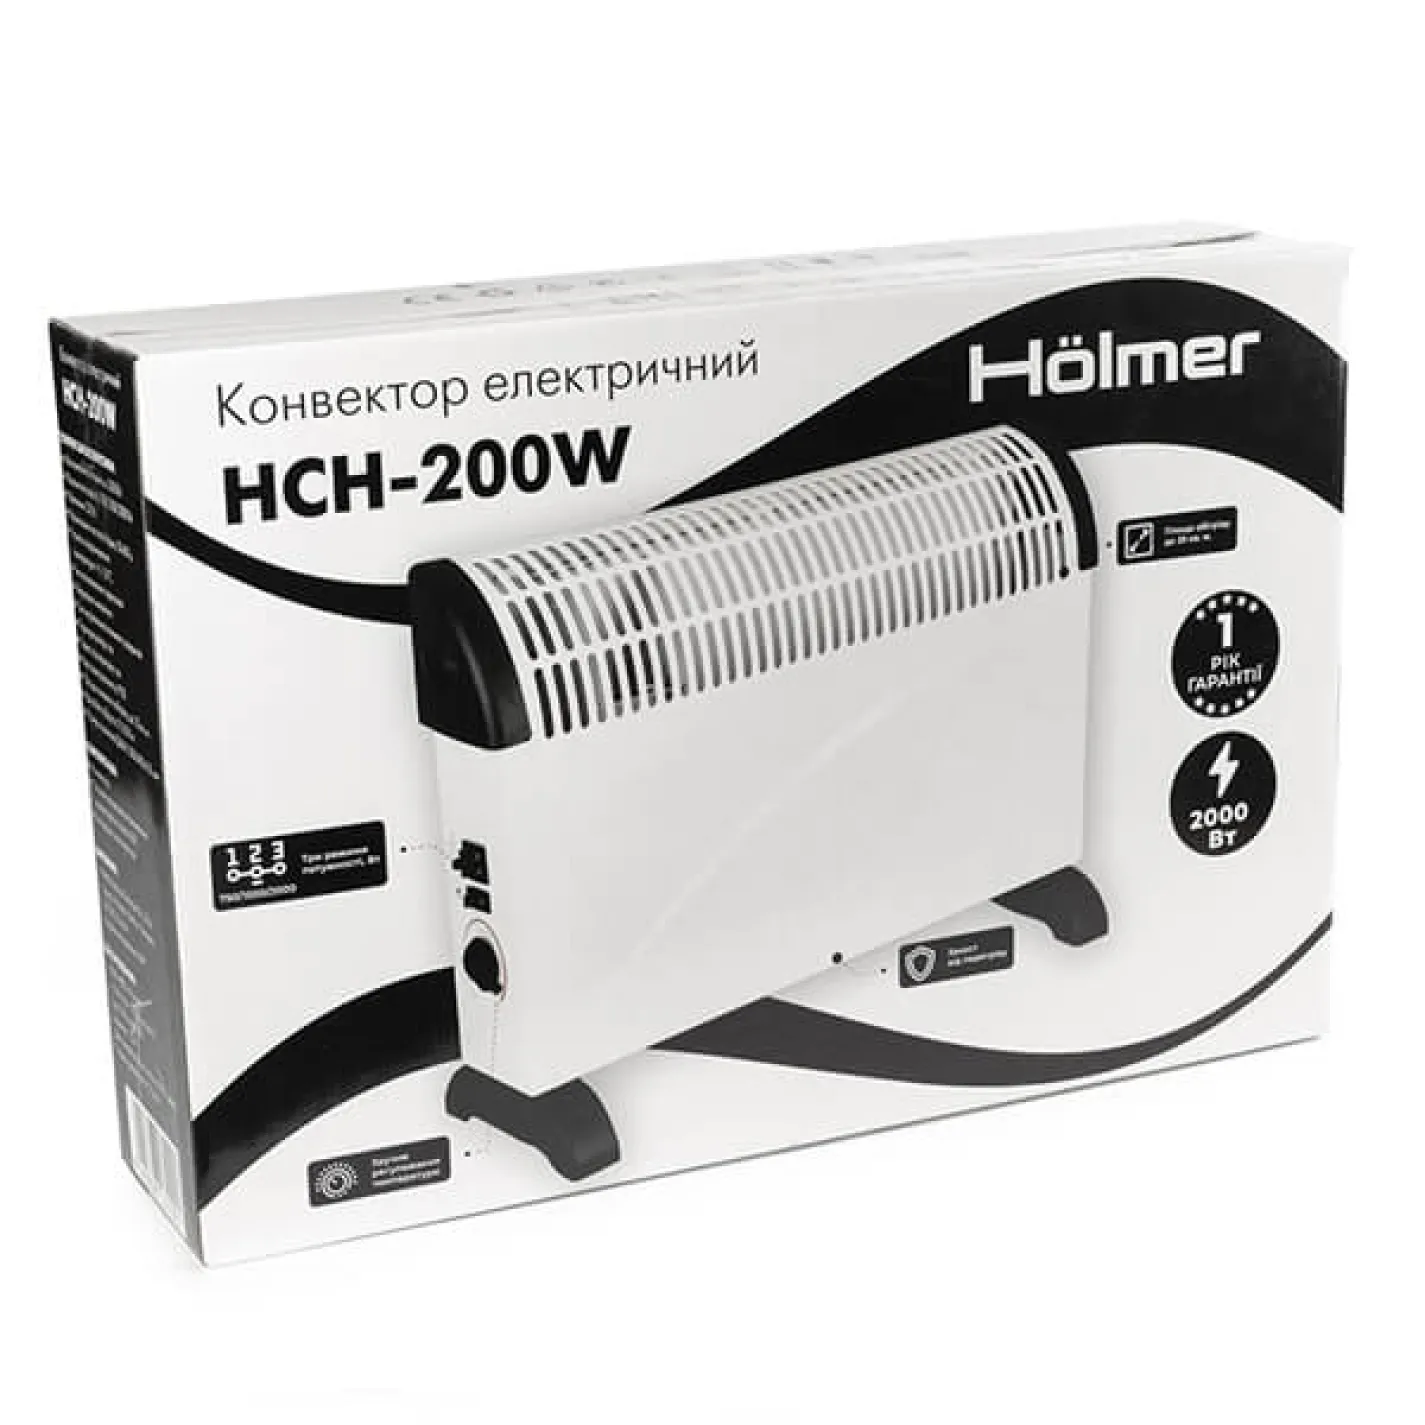 Электрический конвектор Holmer HCH-200W - Фото 5